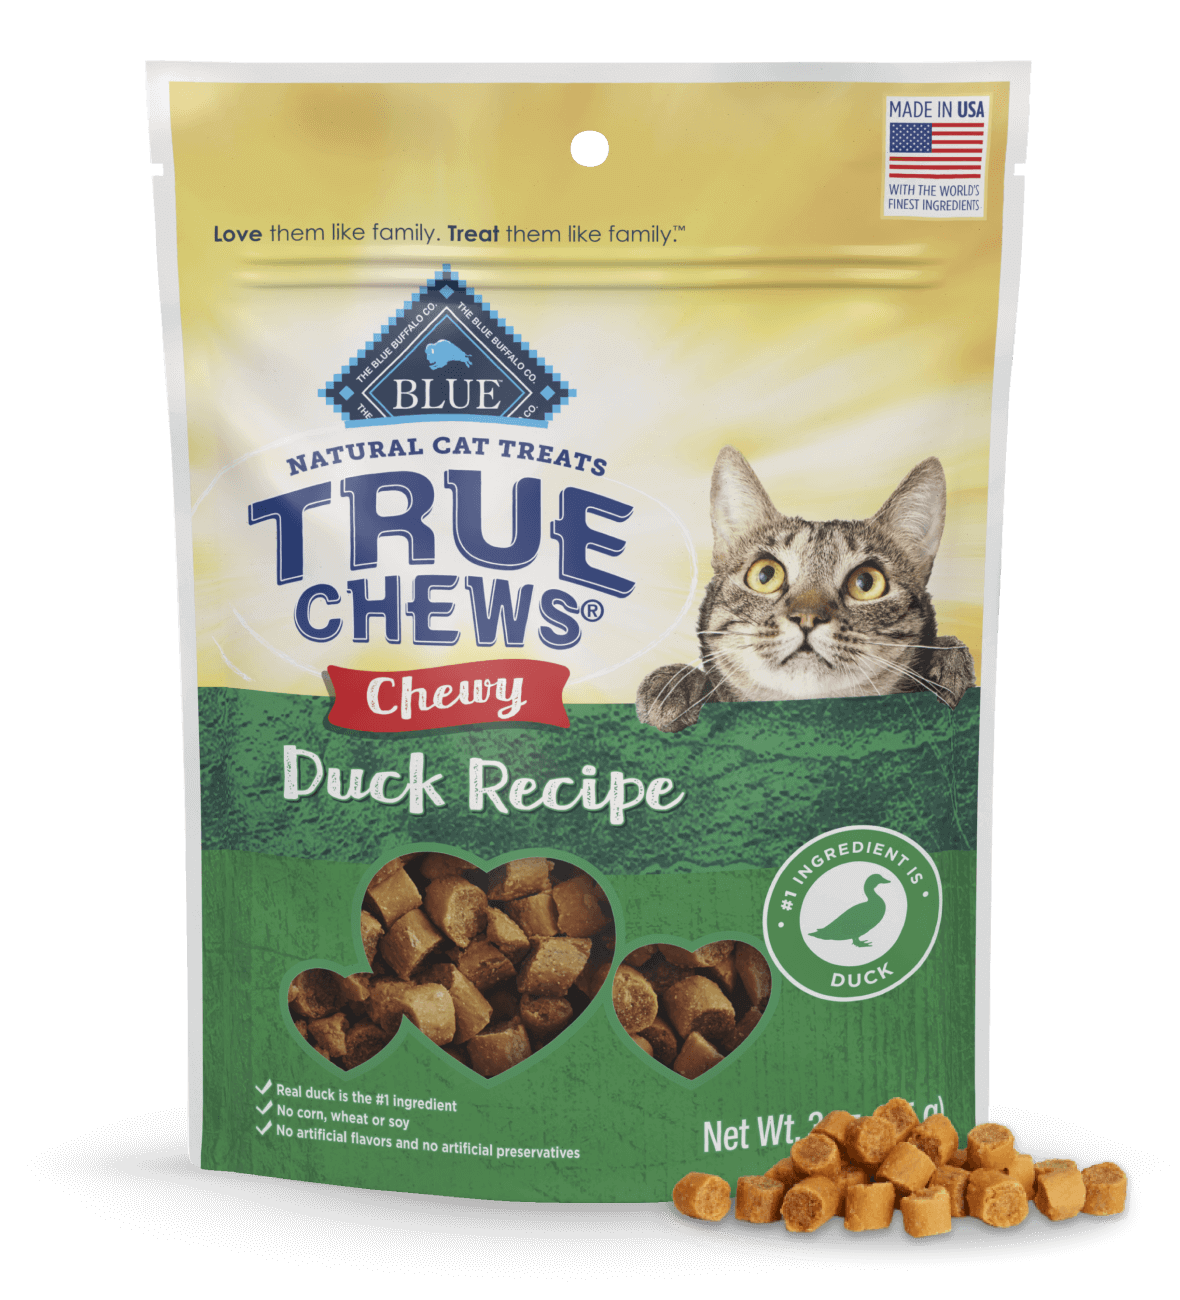 blue true chews ® delicious duck recipe chewy cat treats cat treats